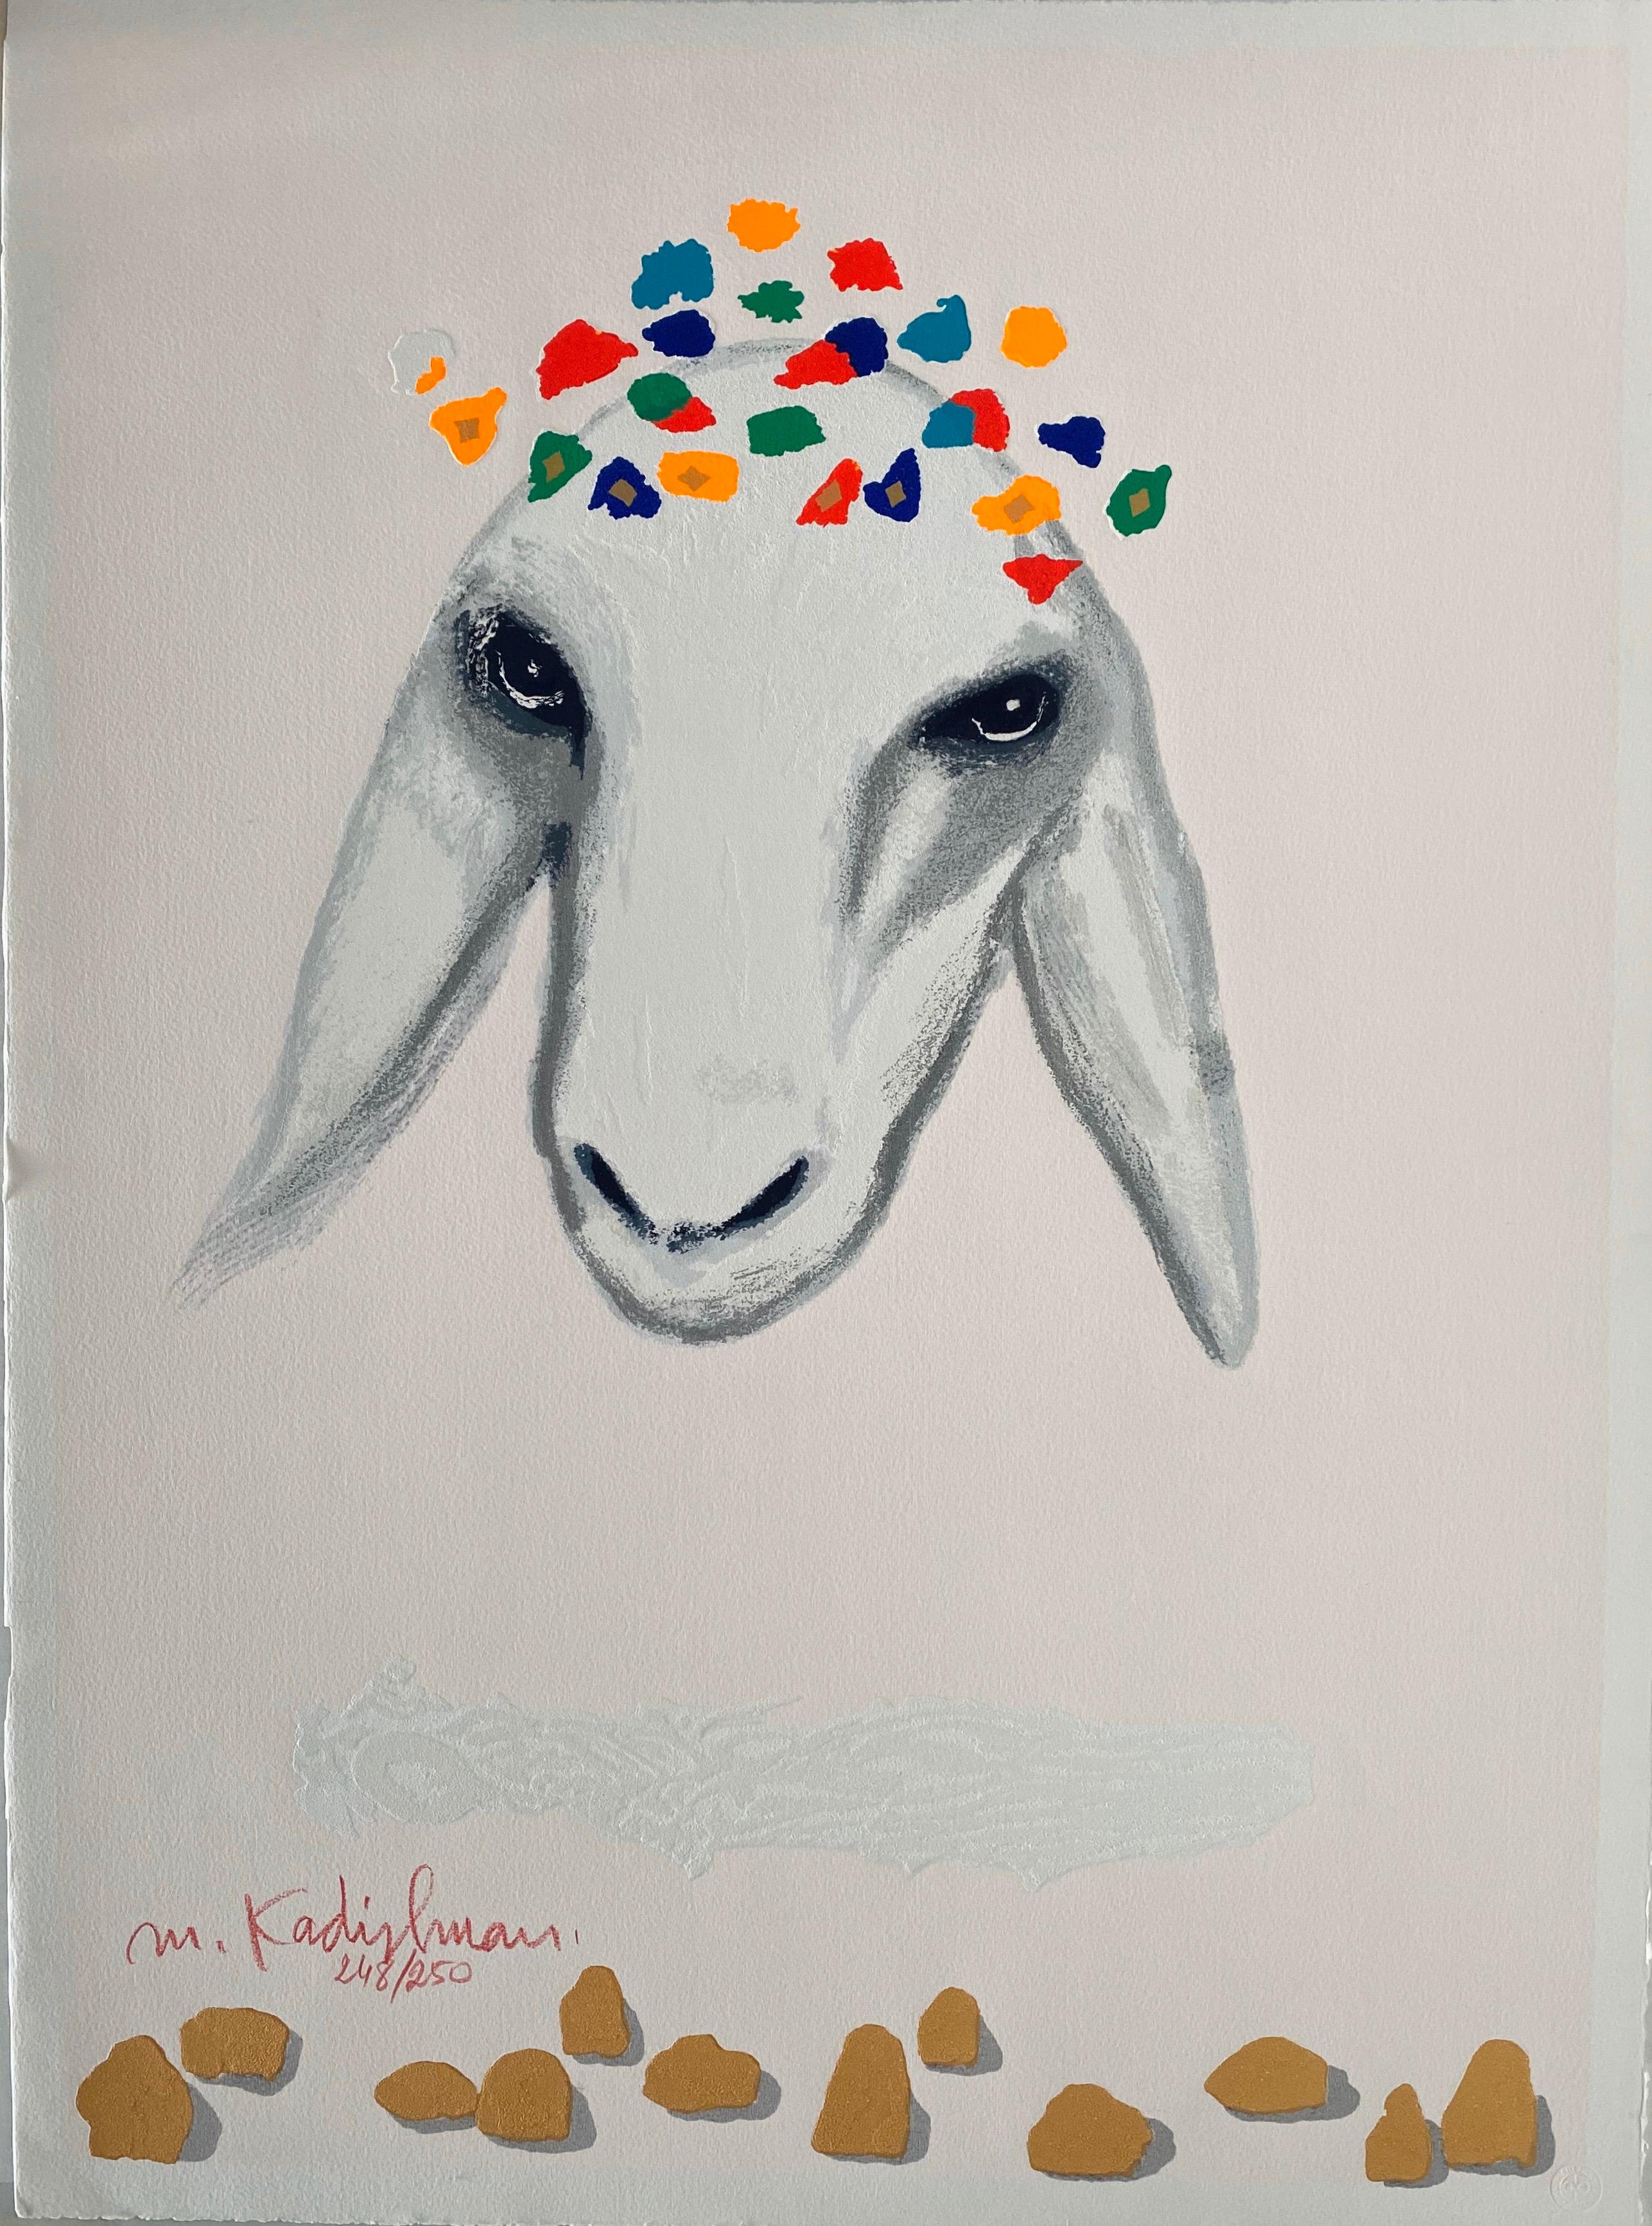 Menashe Kadishman Abstract Print - Kadishman Israeli Colorful Pop Art Screen Print Lithograph "Sheep Head" Judaica 